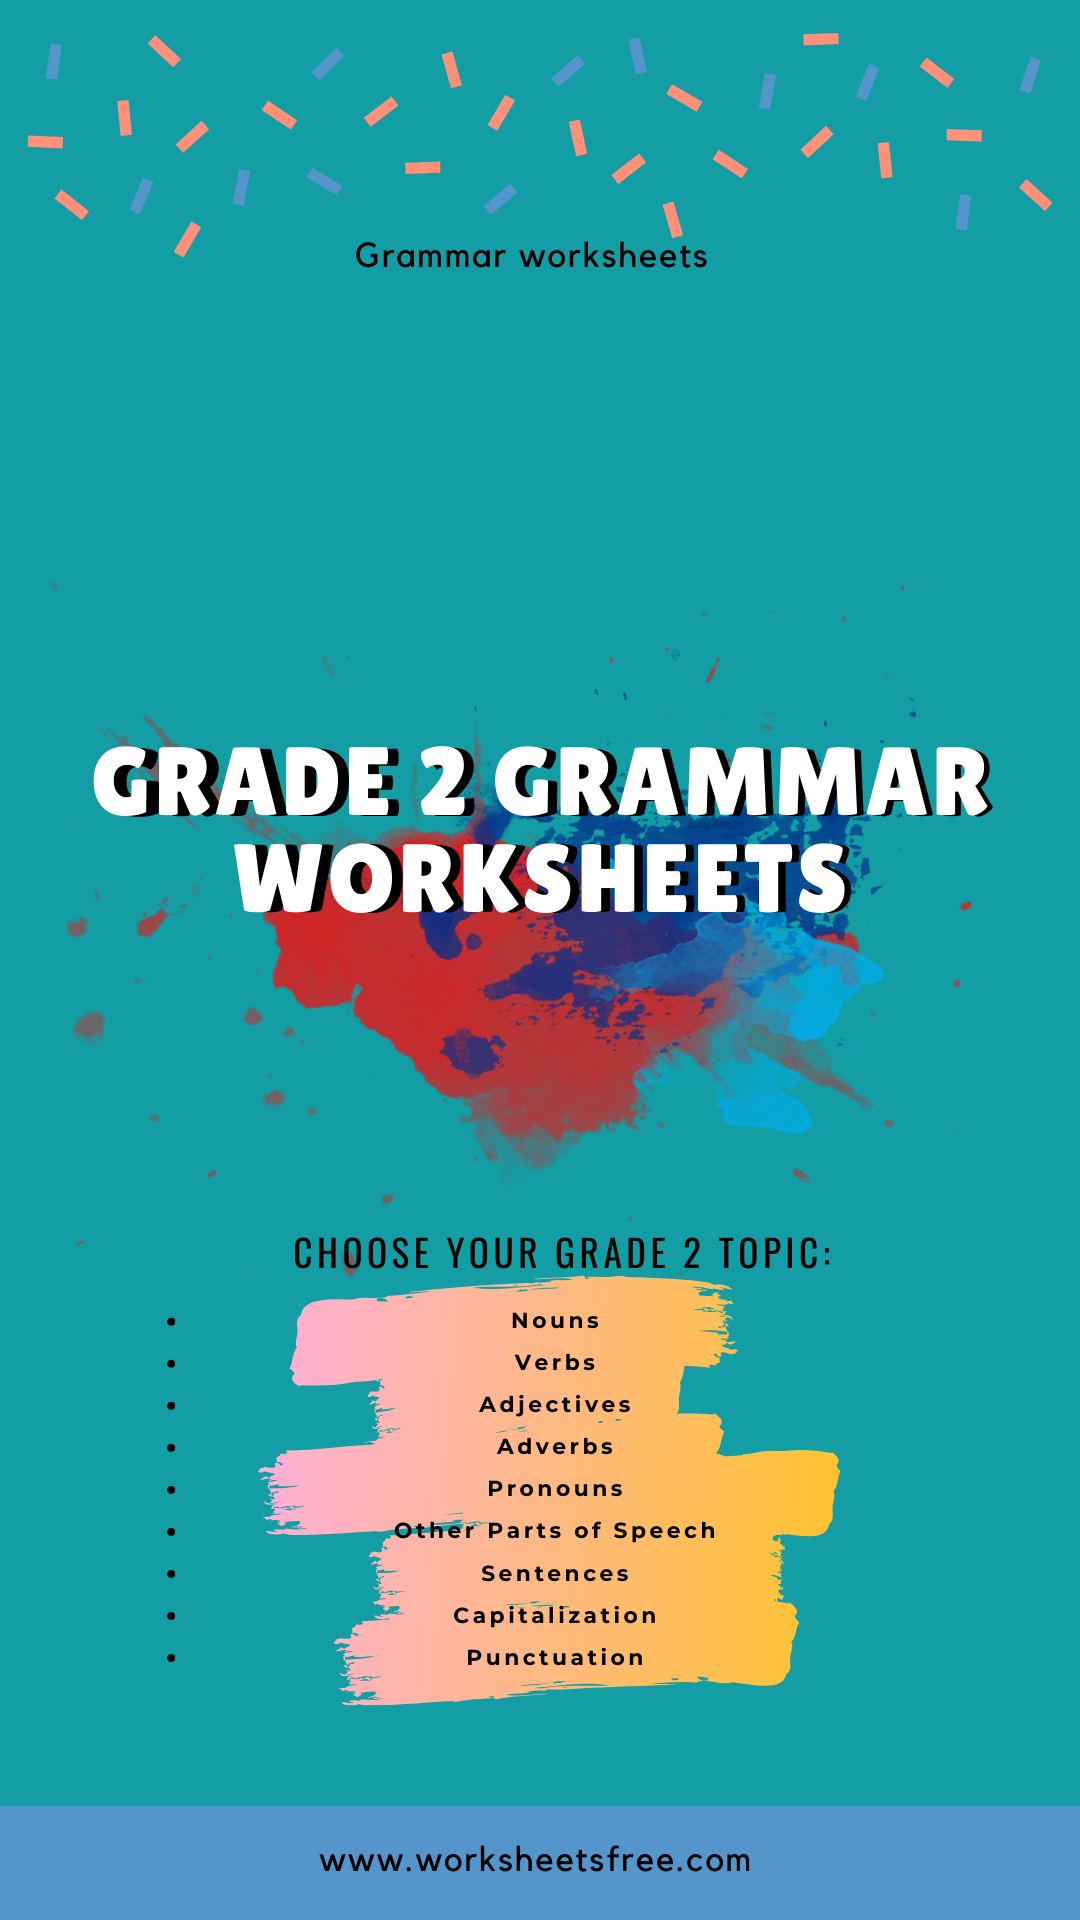 grammar-and-usage-pronouns-worksheet-grade-2-pronoun-worksheet-in-2020-with-images-pronoun